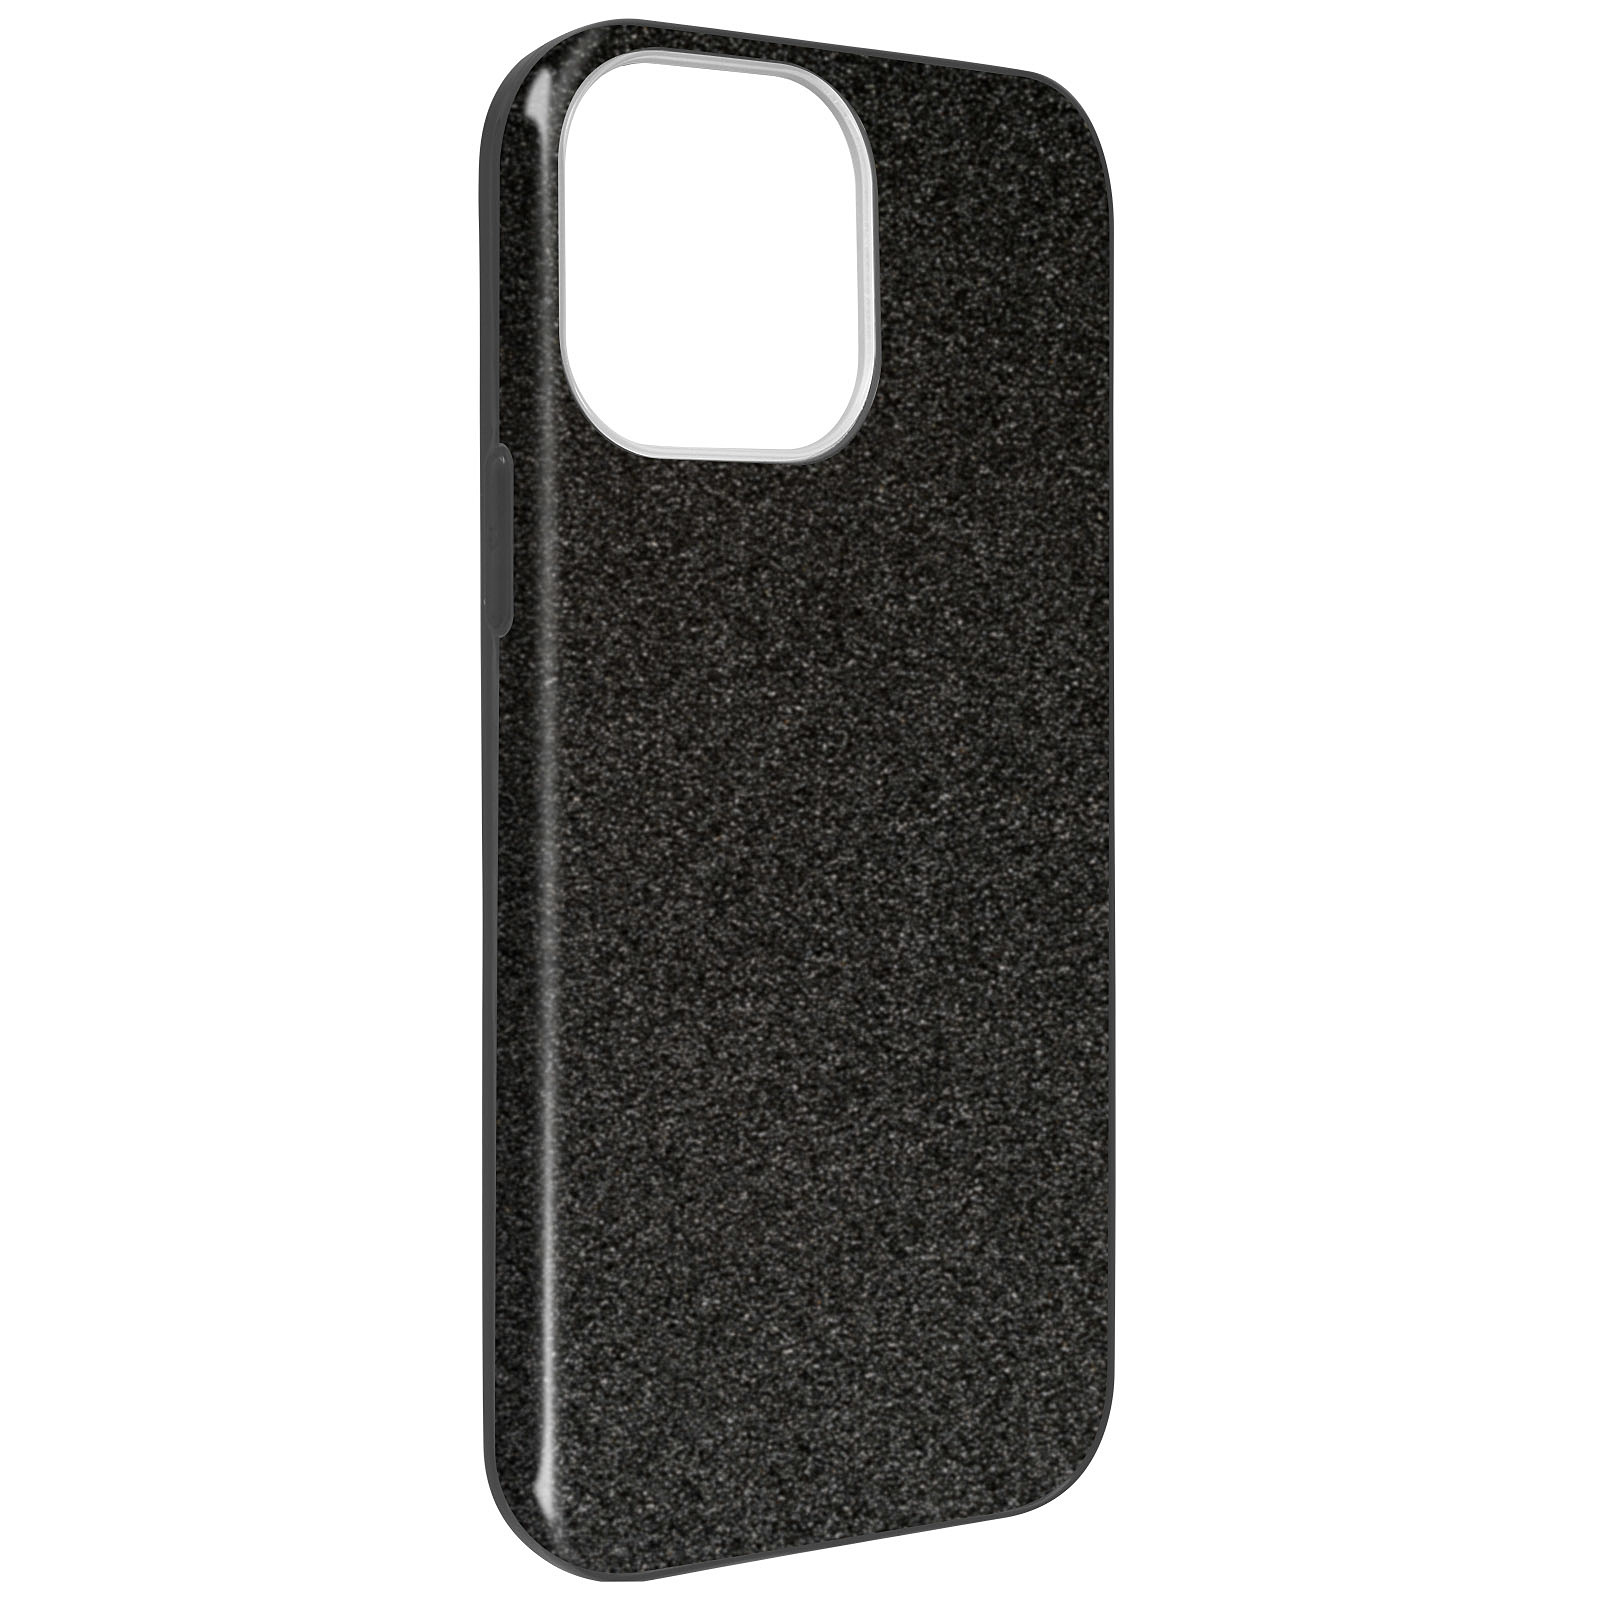 Avizar Coque pour iPhone 13 Mini Design Paillette Amovible Silicone Noir - Coque telephone Avizar